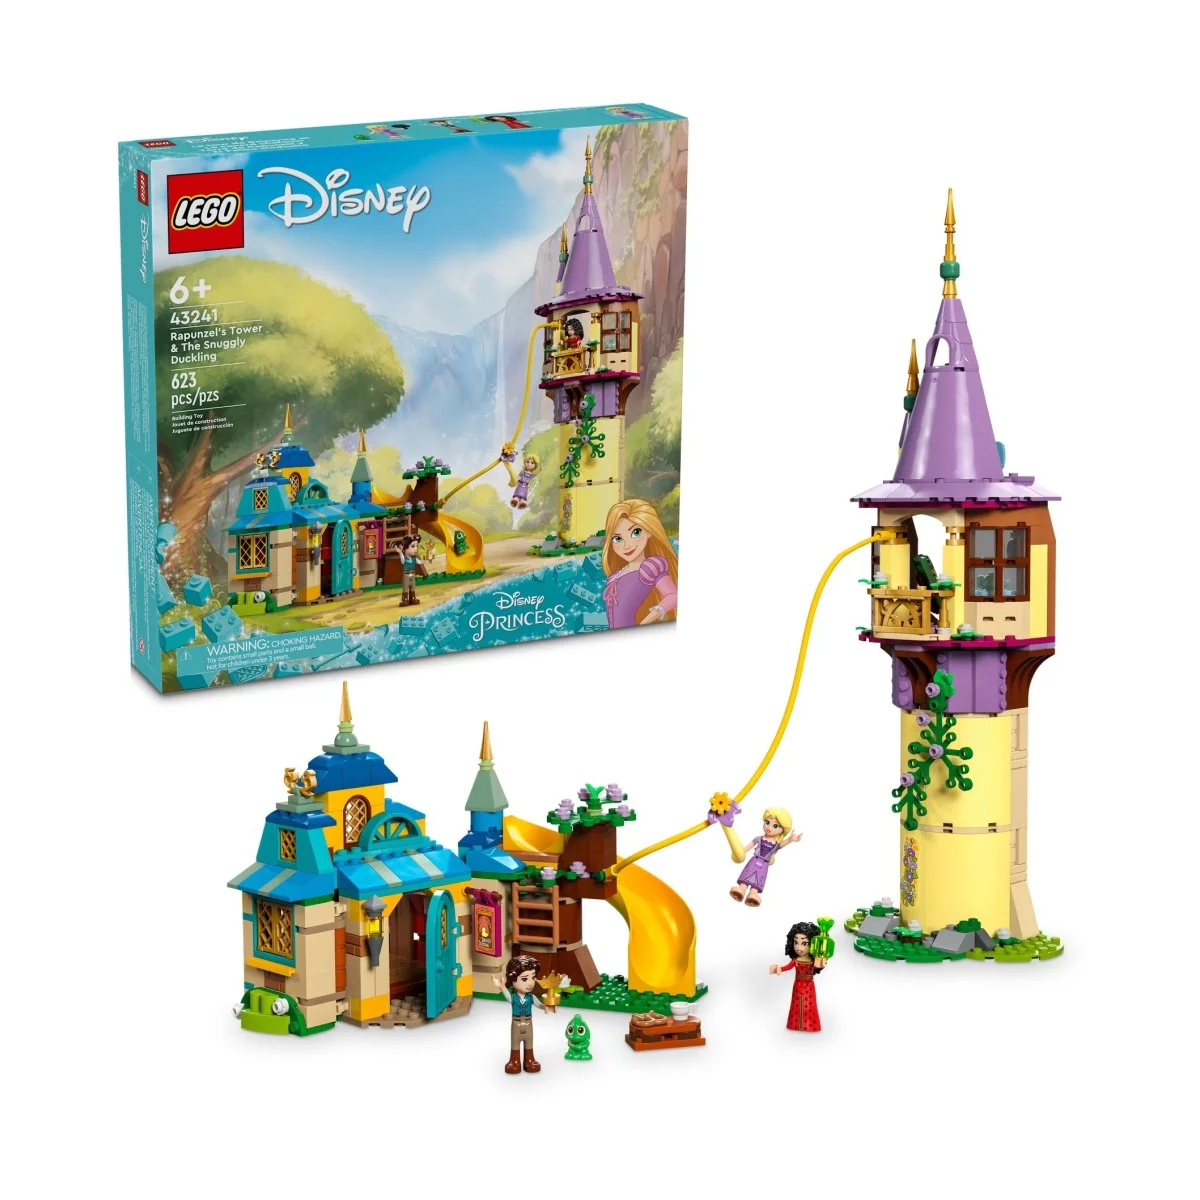 Конструктор Lego Disney Rapunzel's Tower & The Snuggly Duckling 43241, 623 детали 5800 шт детский конструктор башня рапунцель